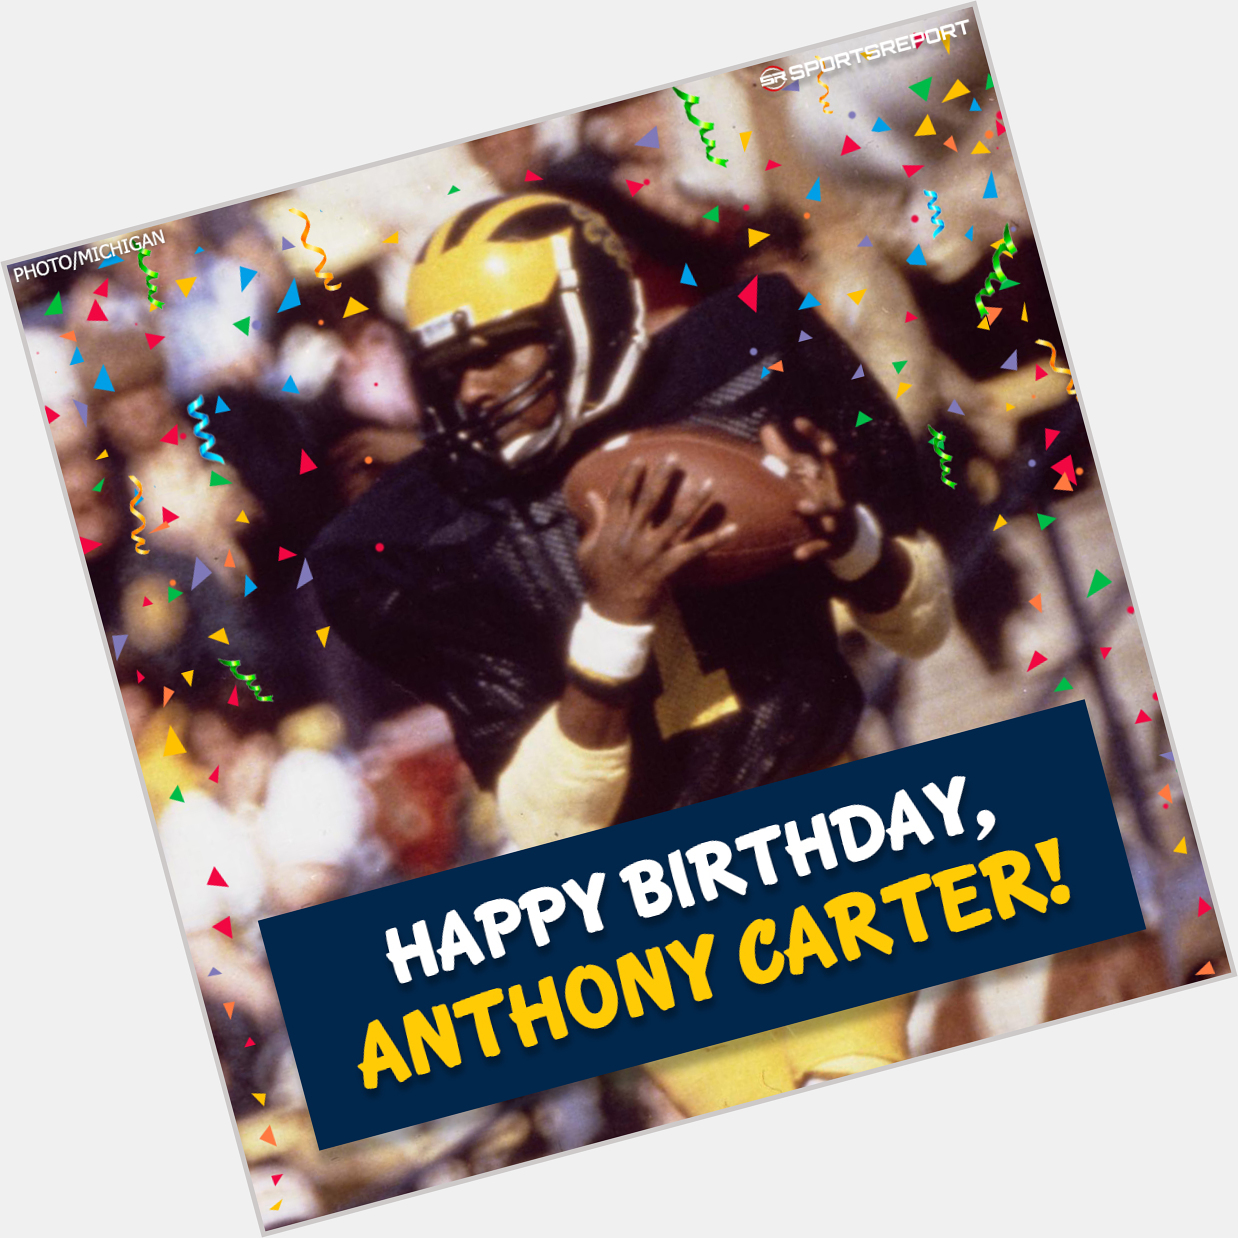 Happy Birthday to Legend, Anthony Carter! 